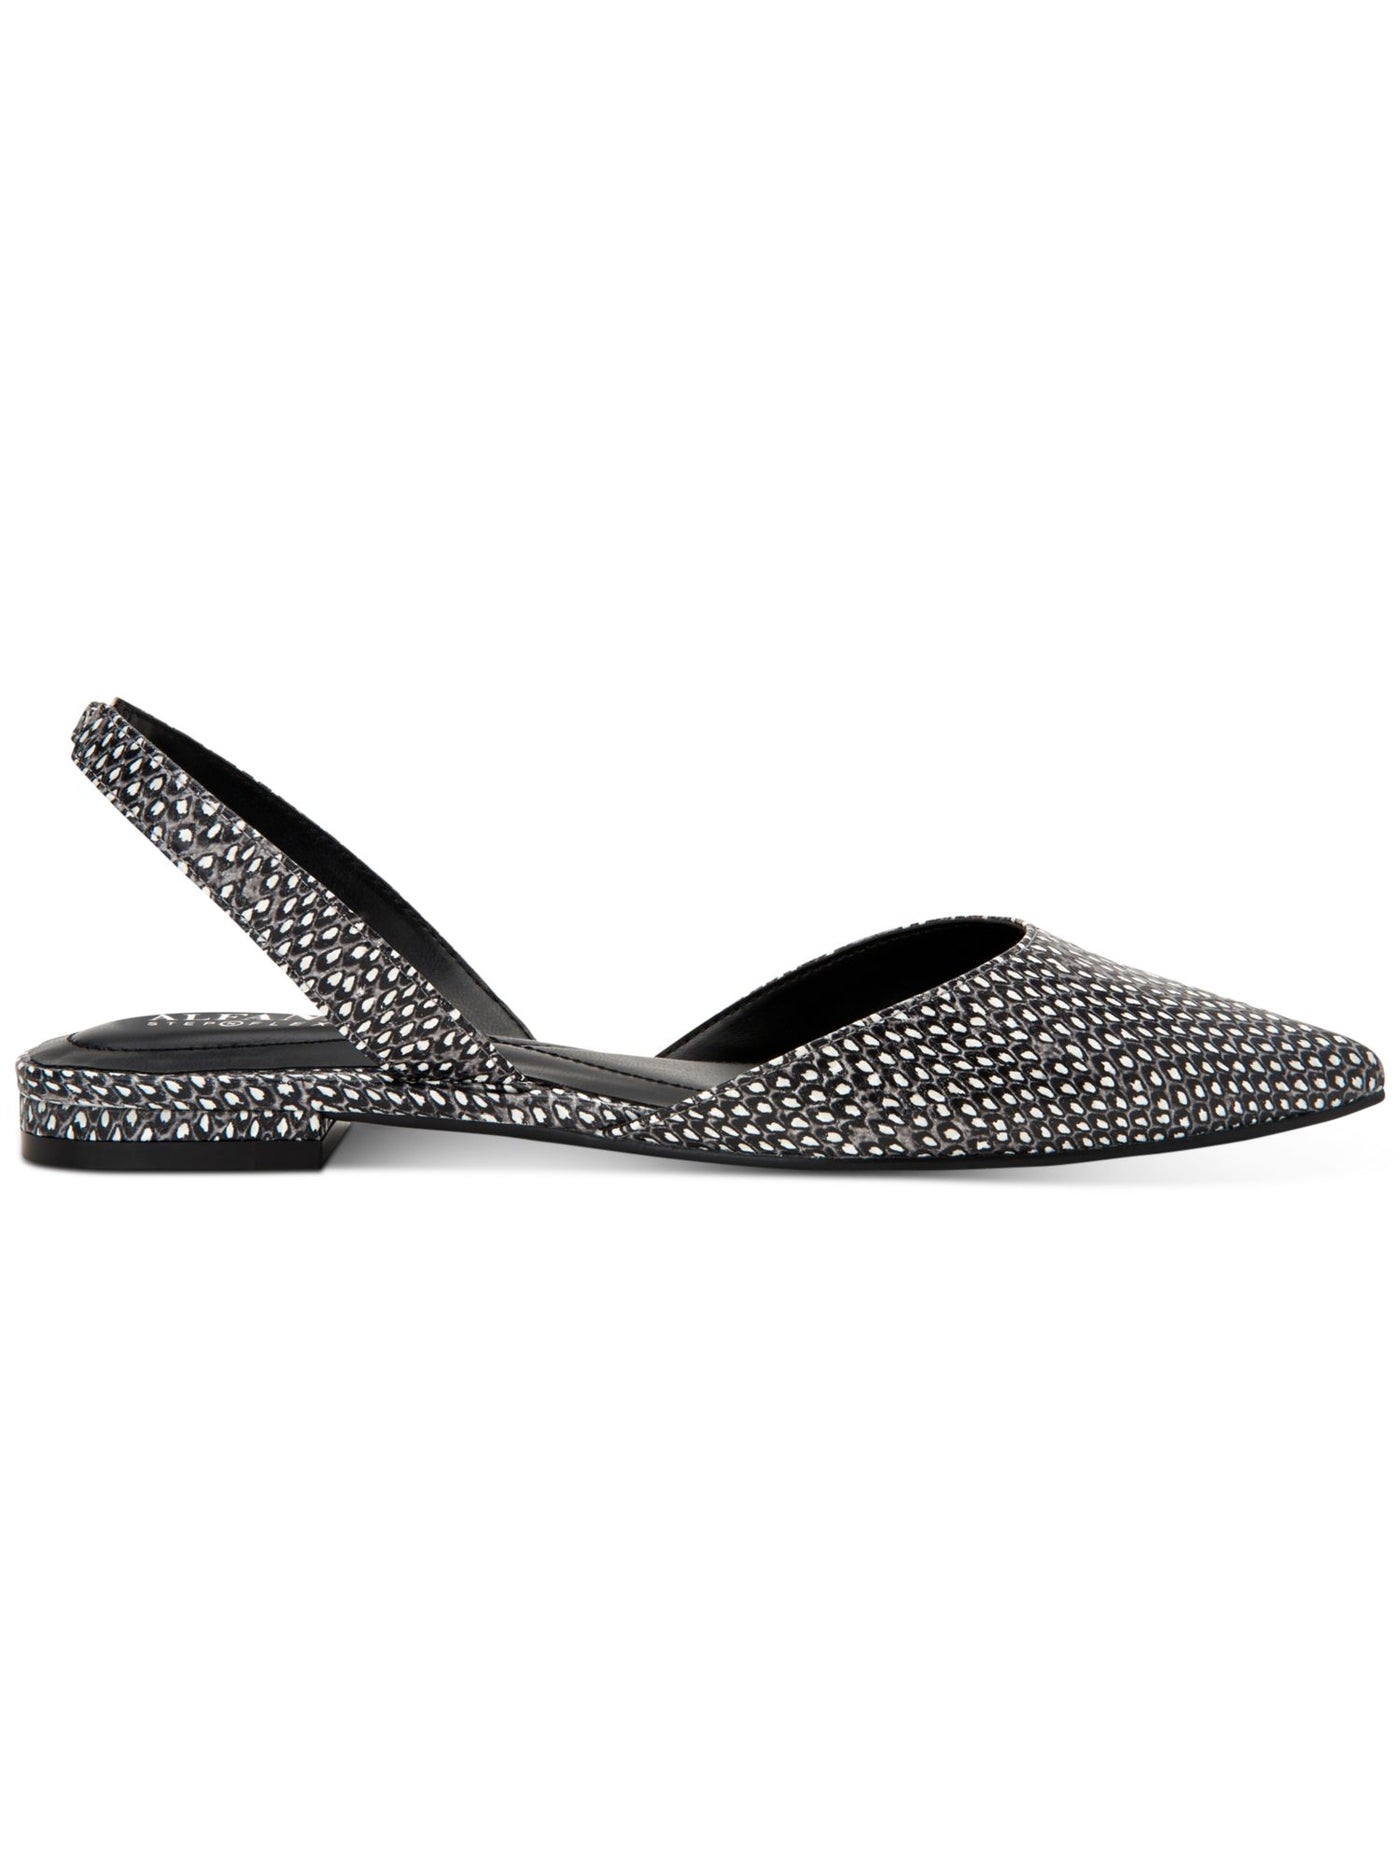 ALFANI Womens Black Snakeskin Cushioned Comfort Ryann Pointed Toe Block Heel Slip On Flats Shoes 6.5 M